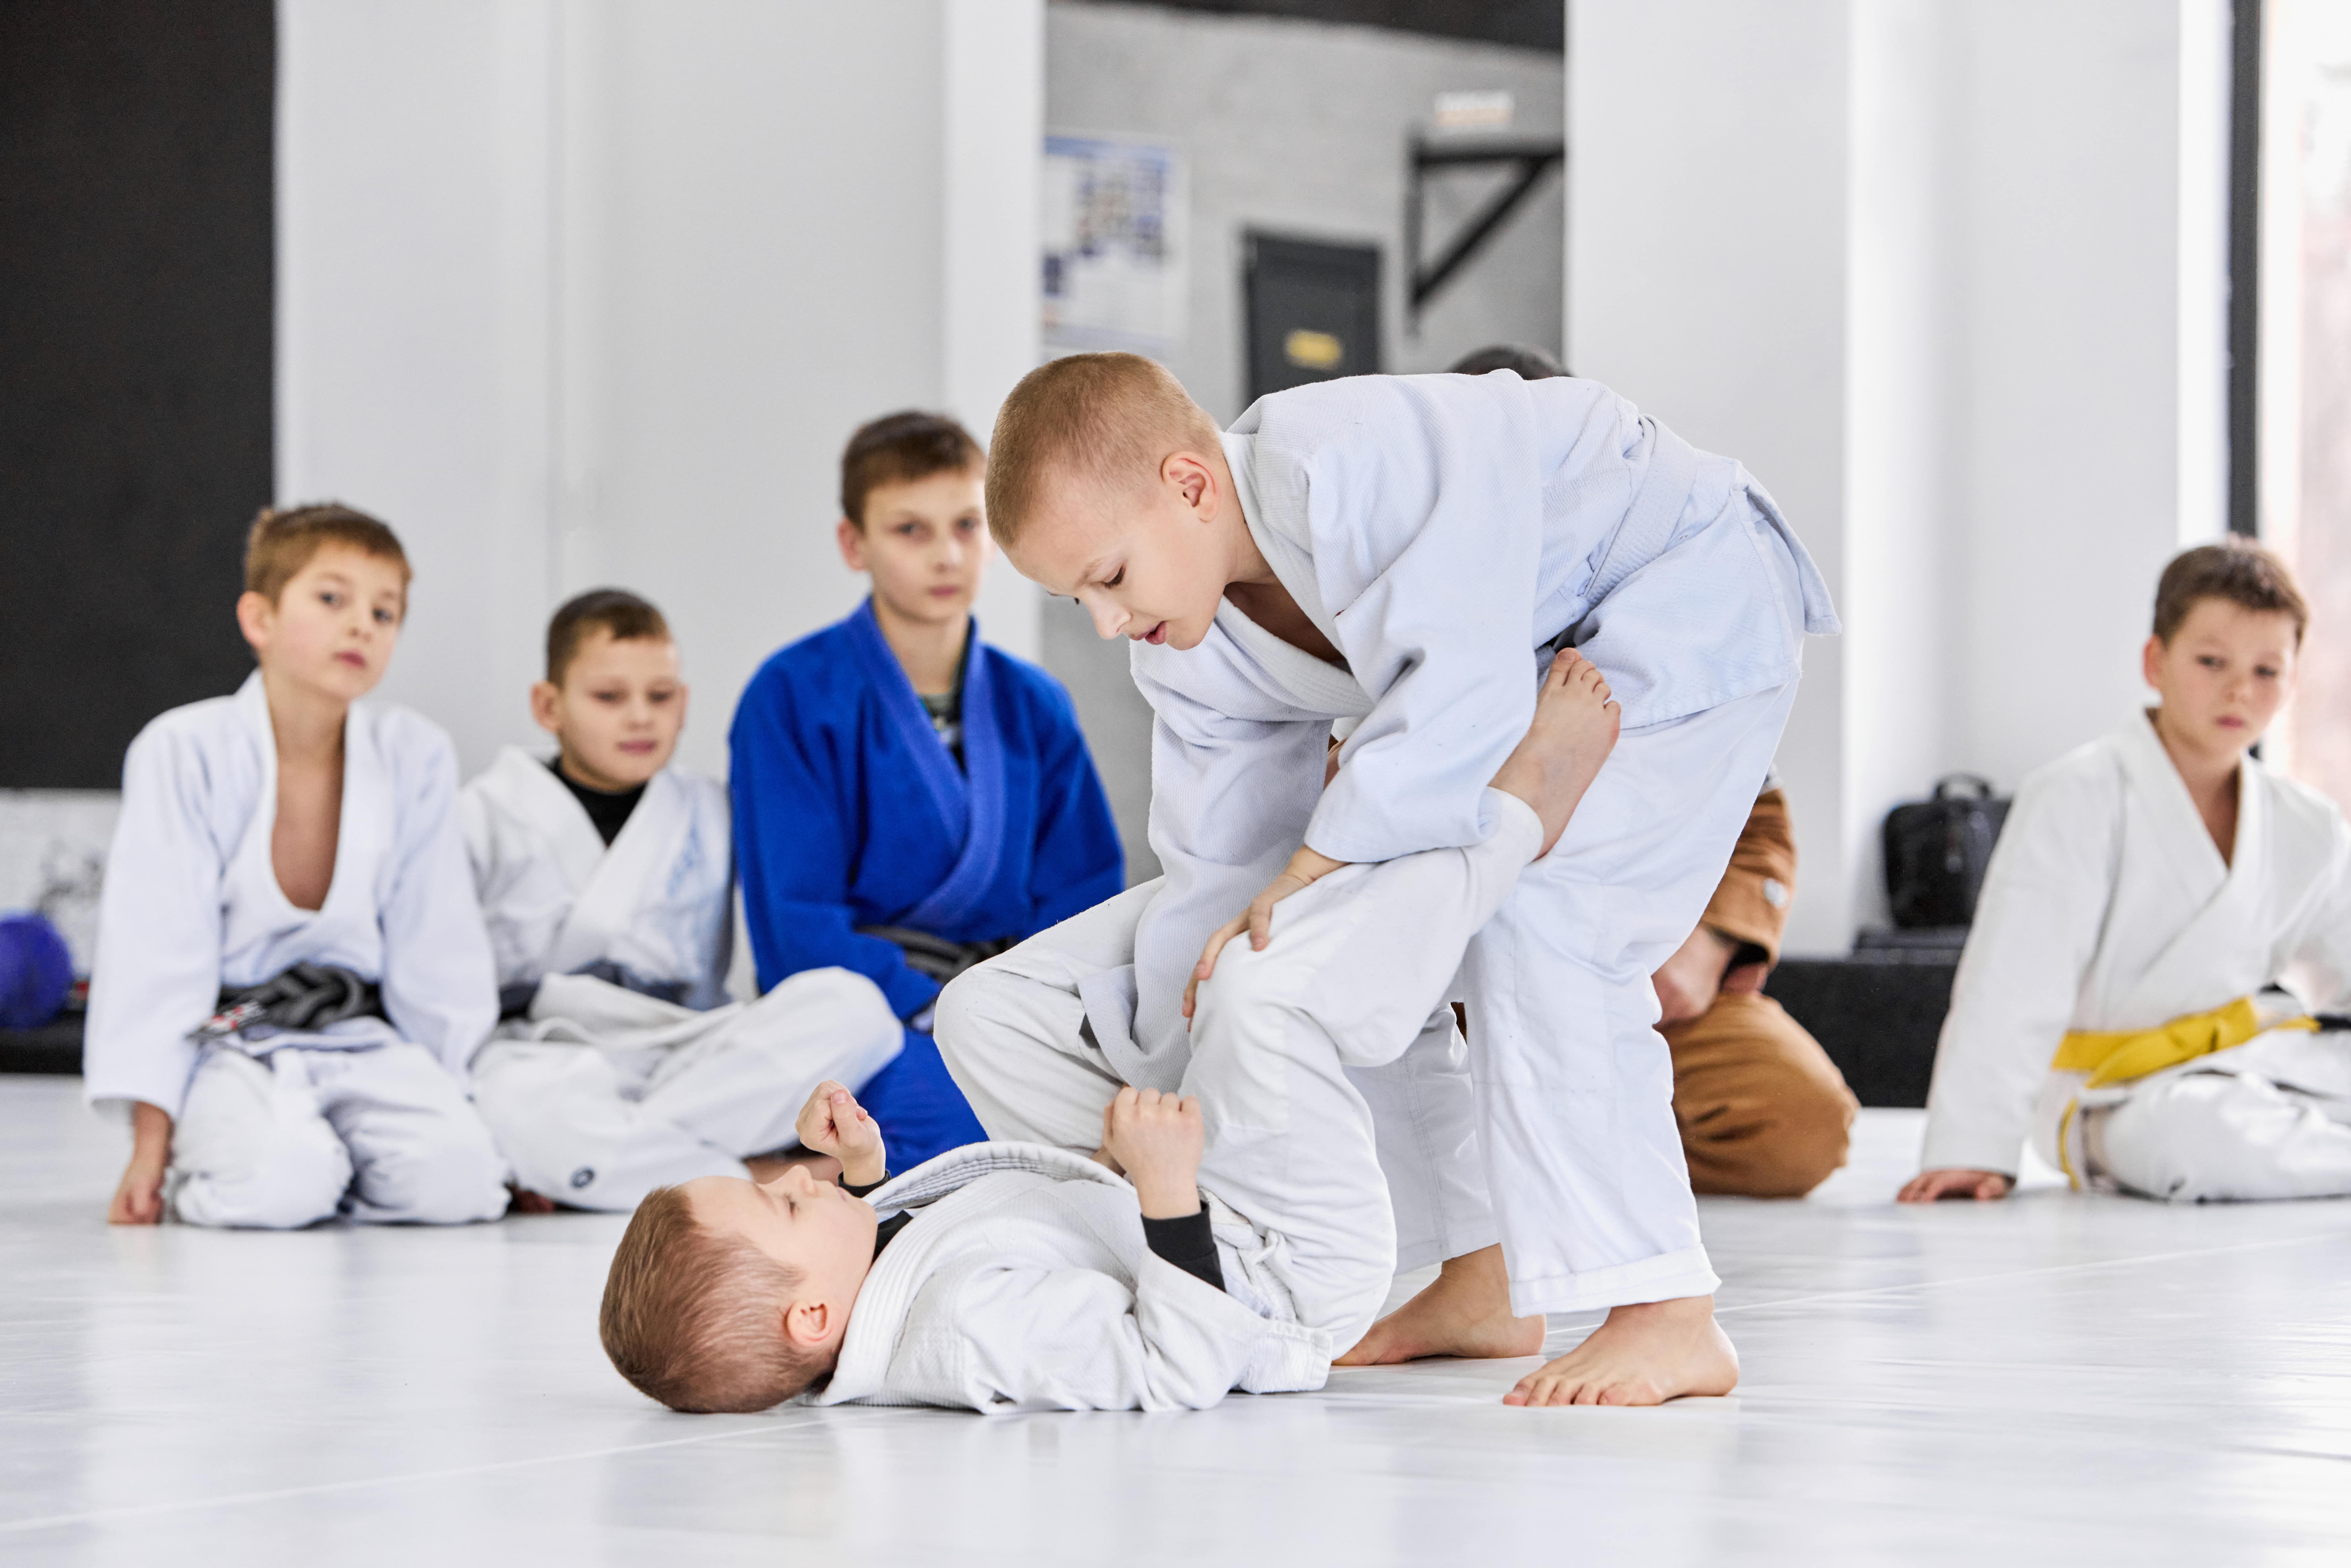 Teamwork makes the dream work in our Youth Jiu Jitsu class